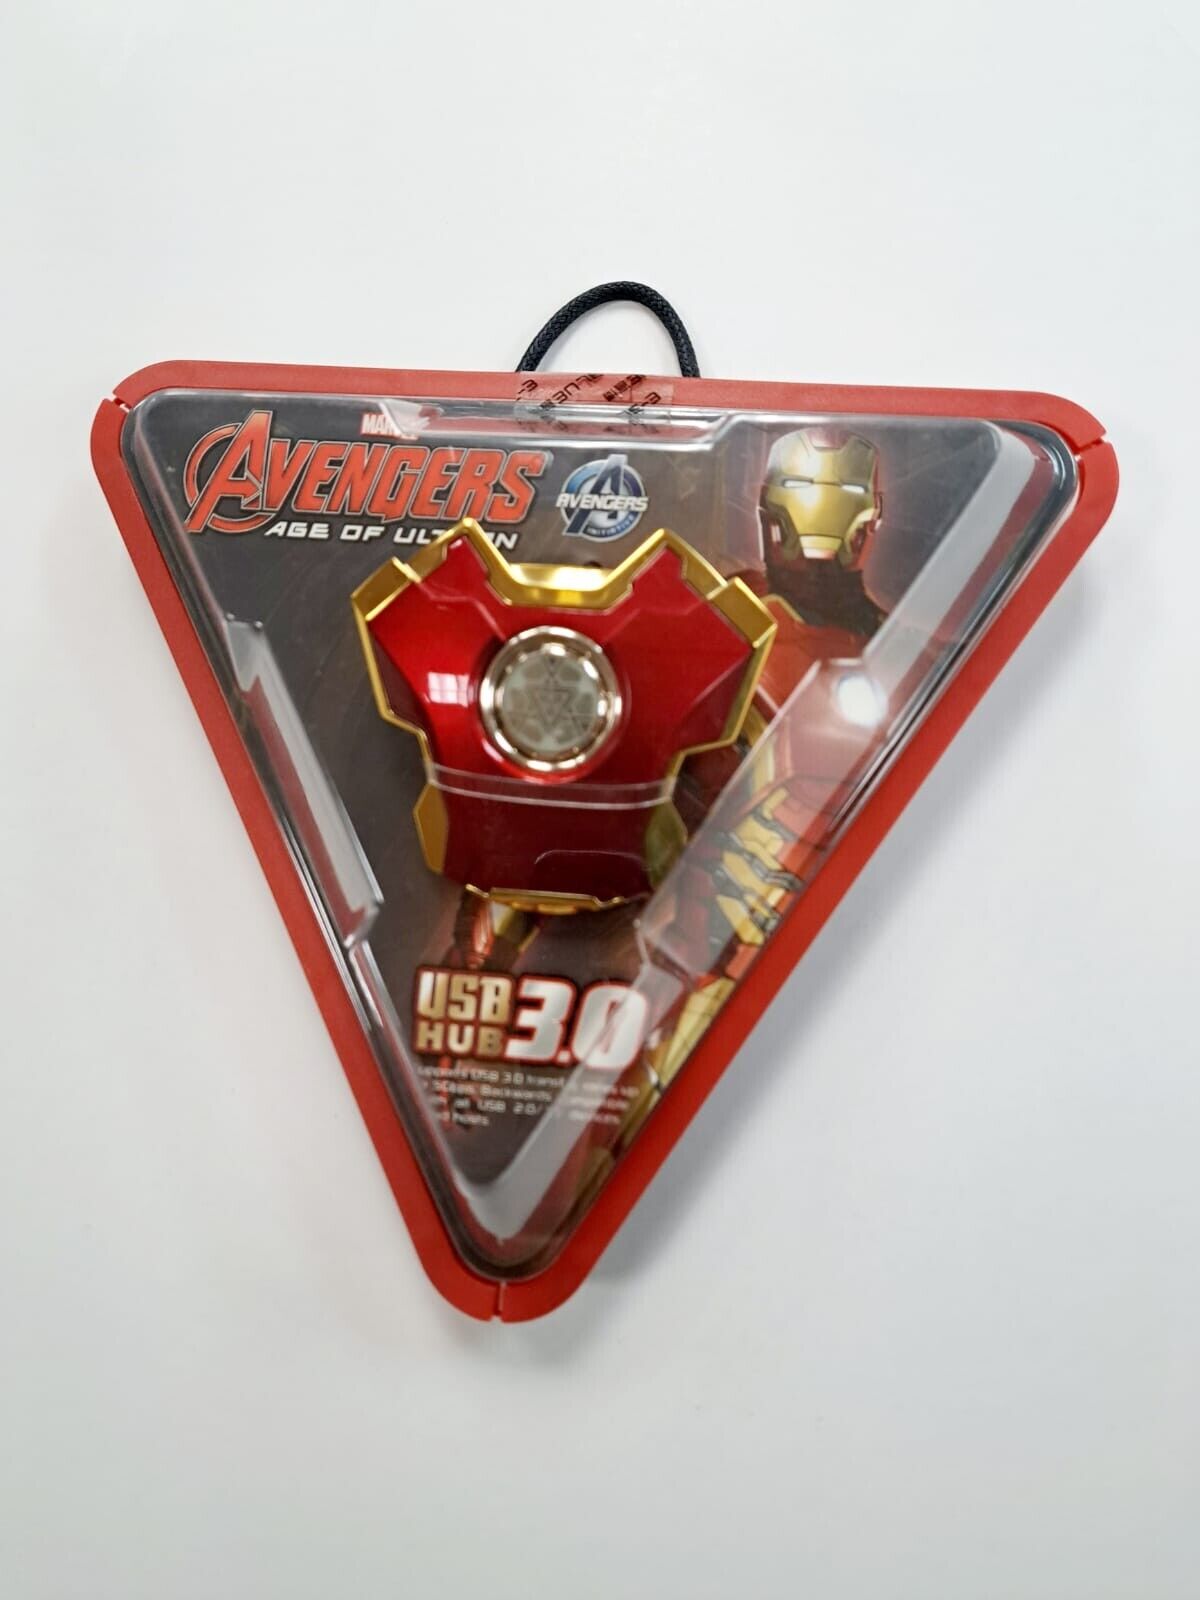 Iron man Arc Reactor 3.0 USB Hub - Age of Ultron Avengers - BRAND NEW SEALED